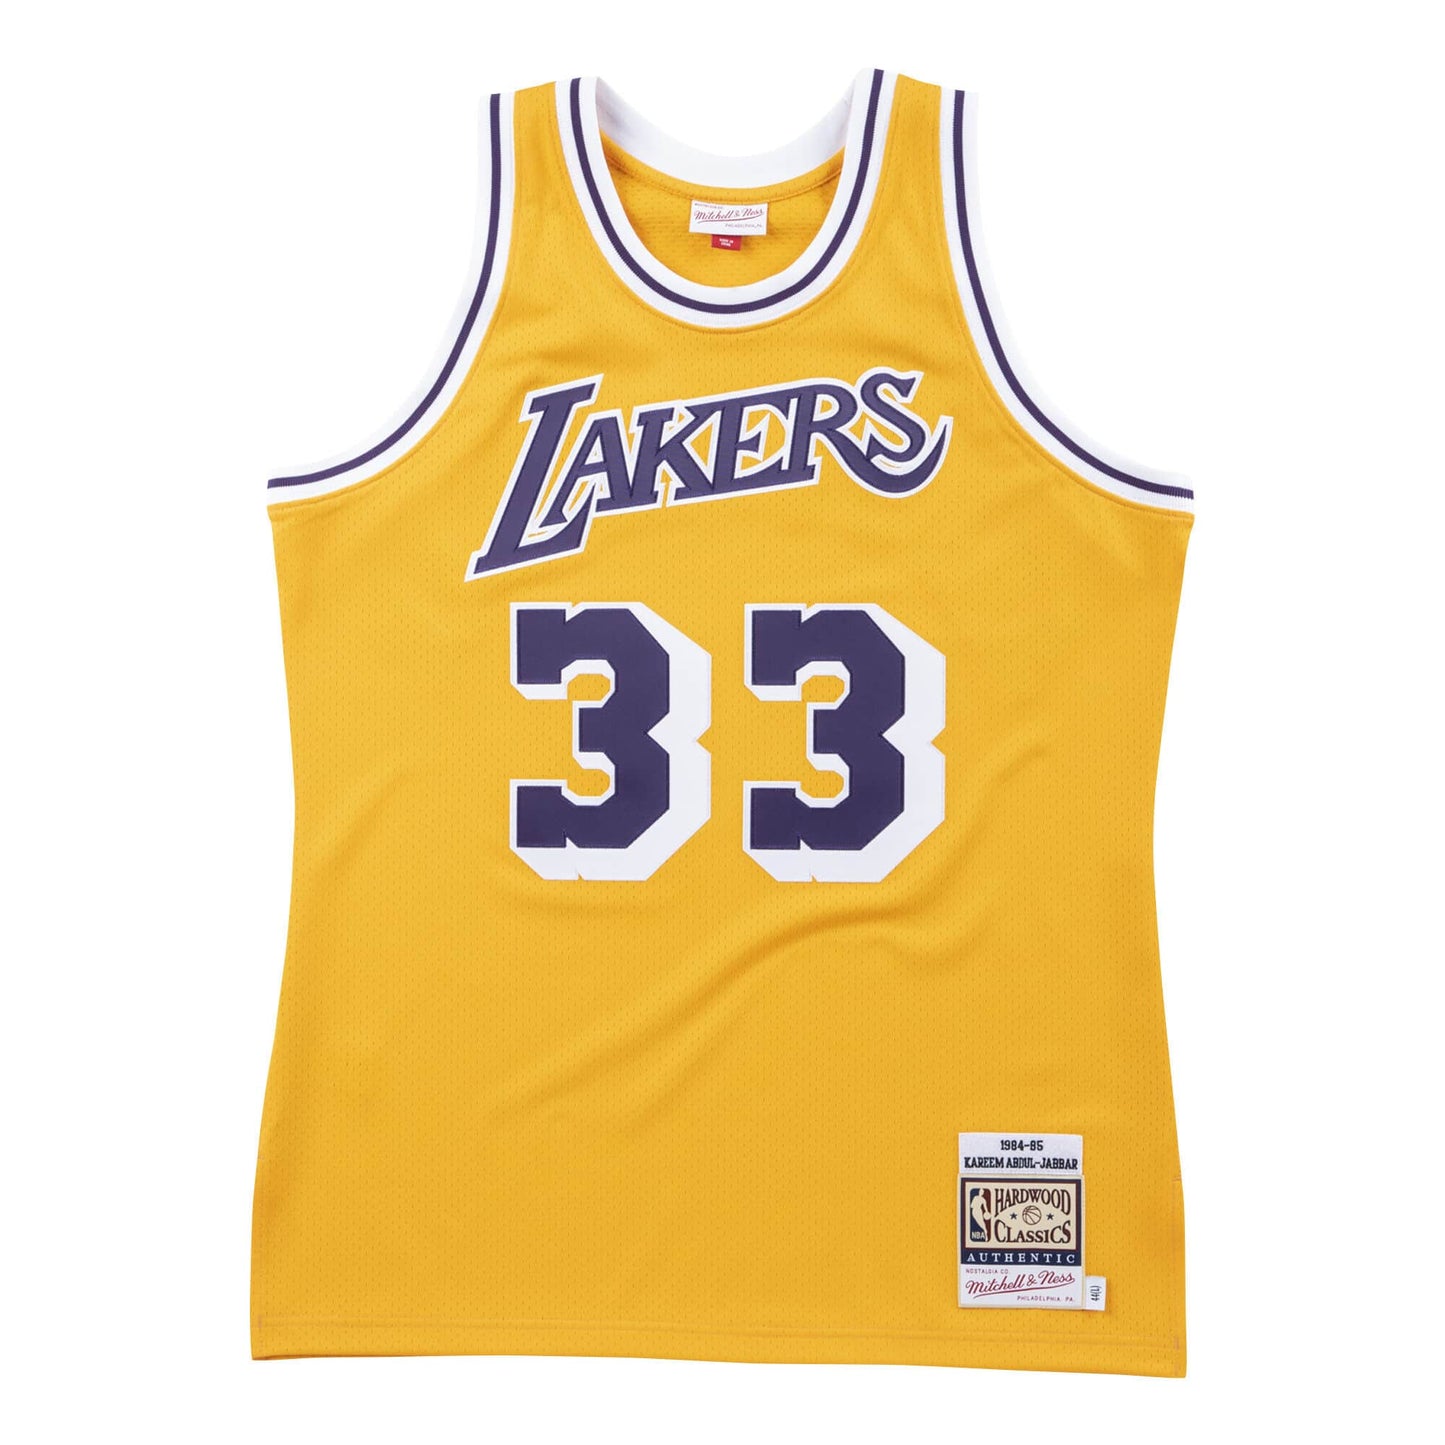 Authentic Jersey Los Angeles Lakers 1984-85 Kareem Abdul-Jabbar